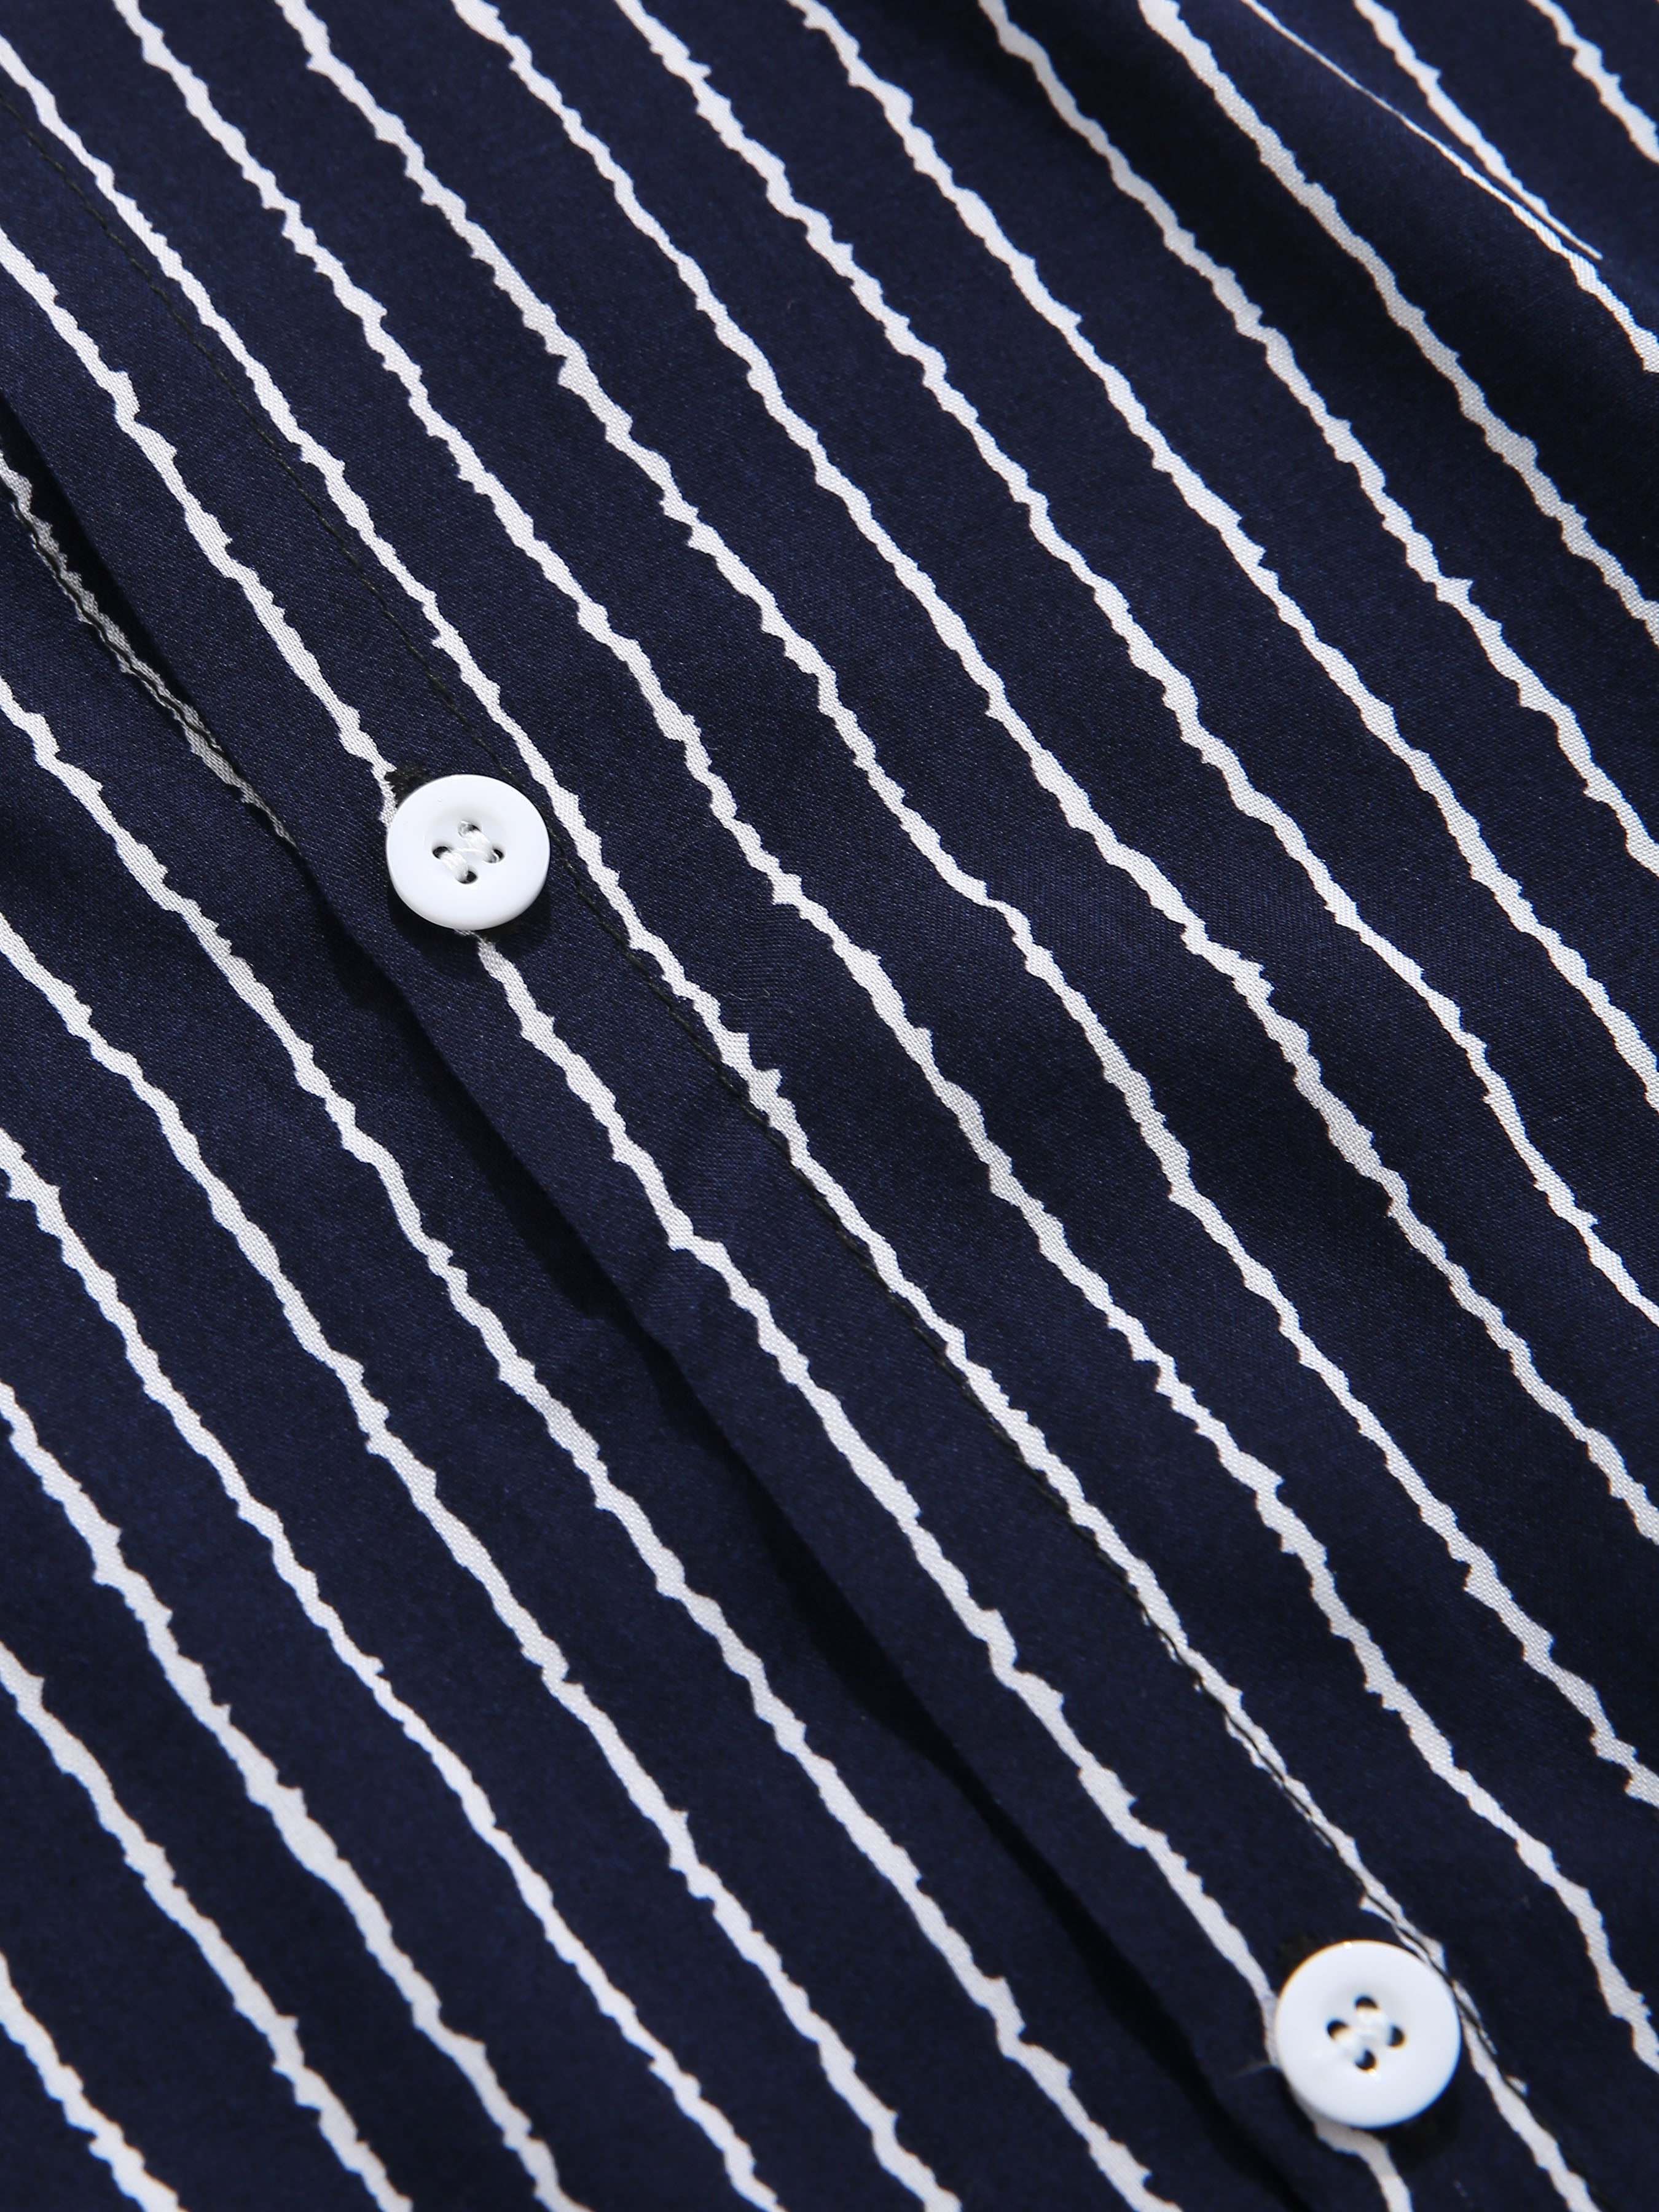 Vintage Stripes Cotton Shirts